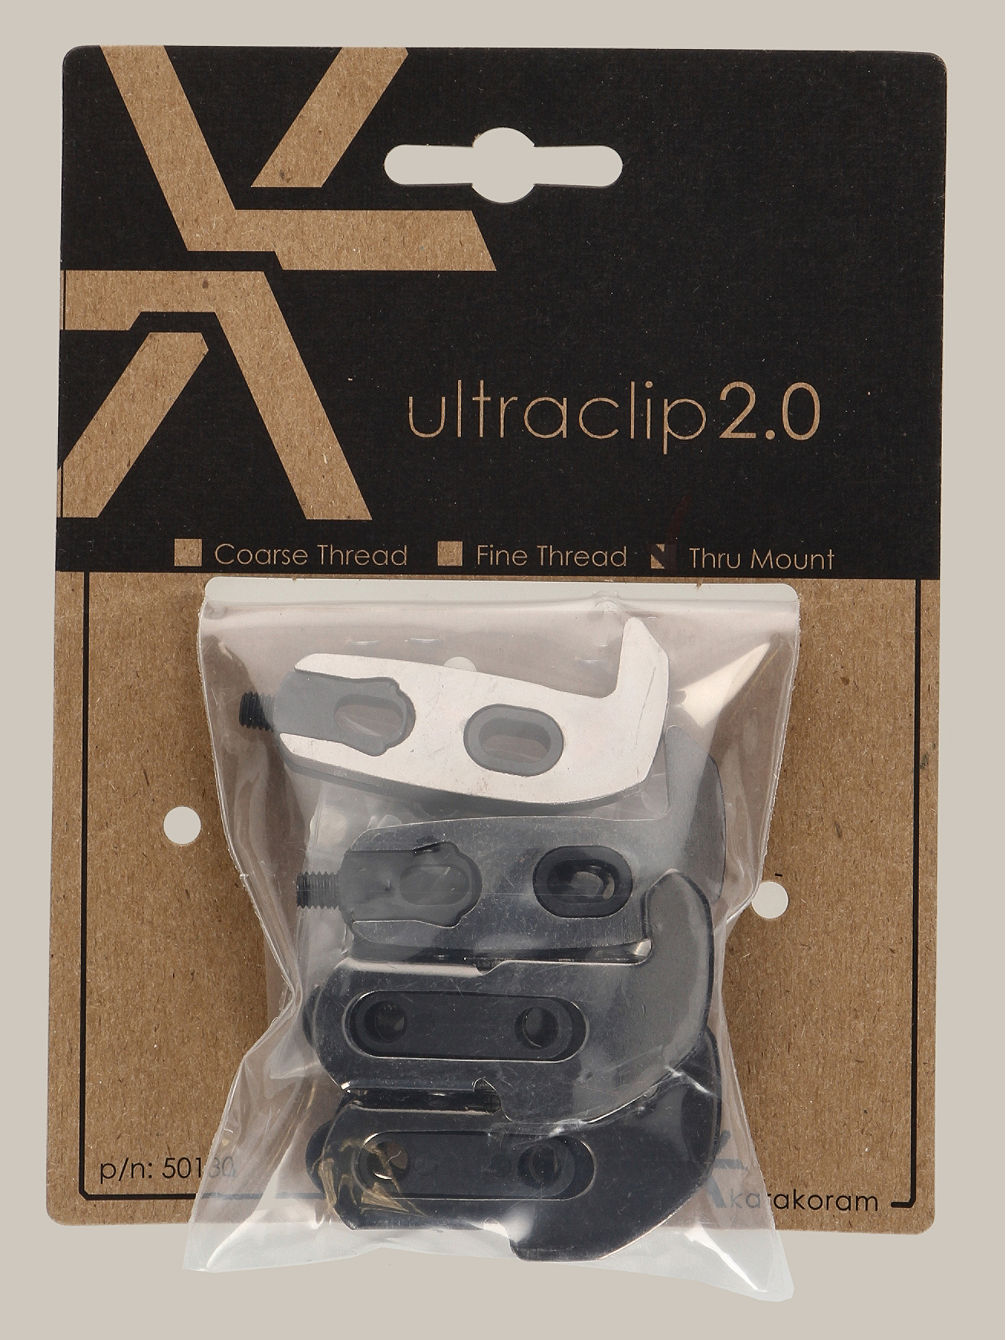 Ultraclip 2.0 (with M5 Thru Mount Hardw)t) S